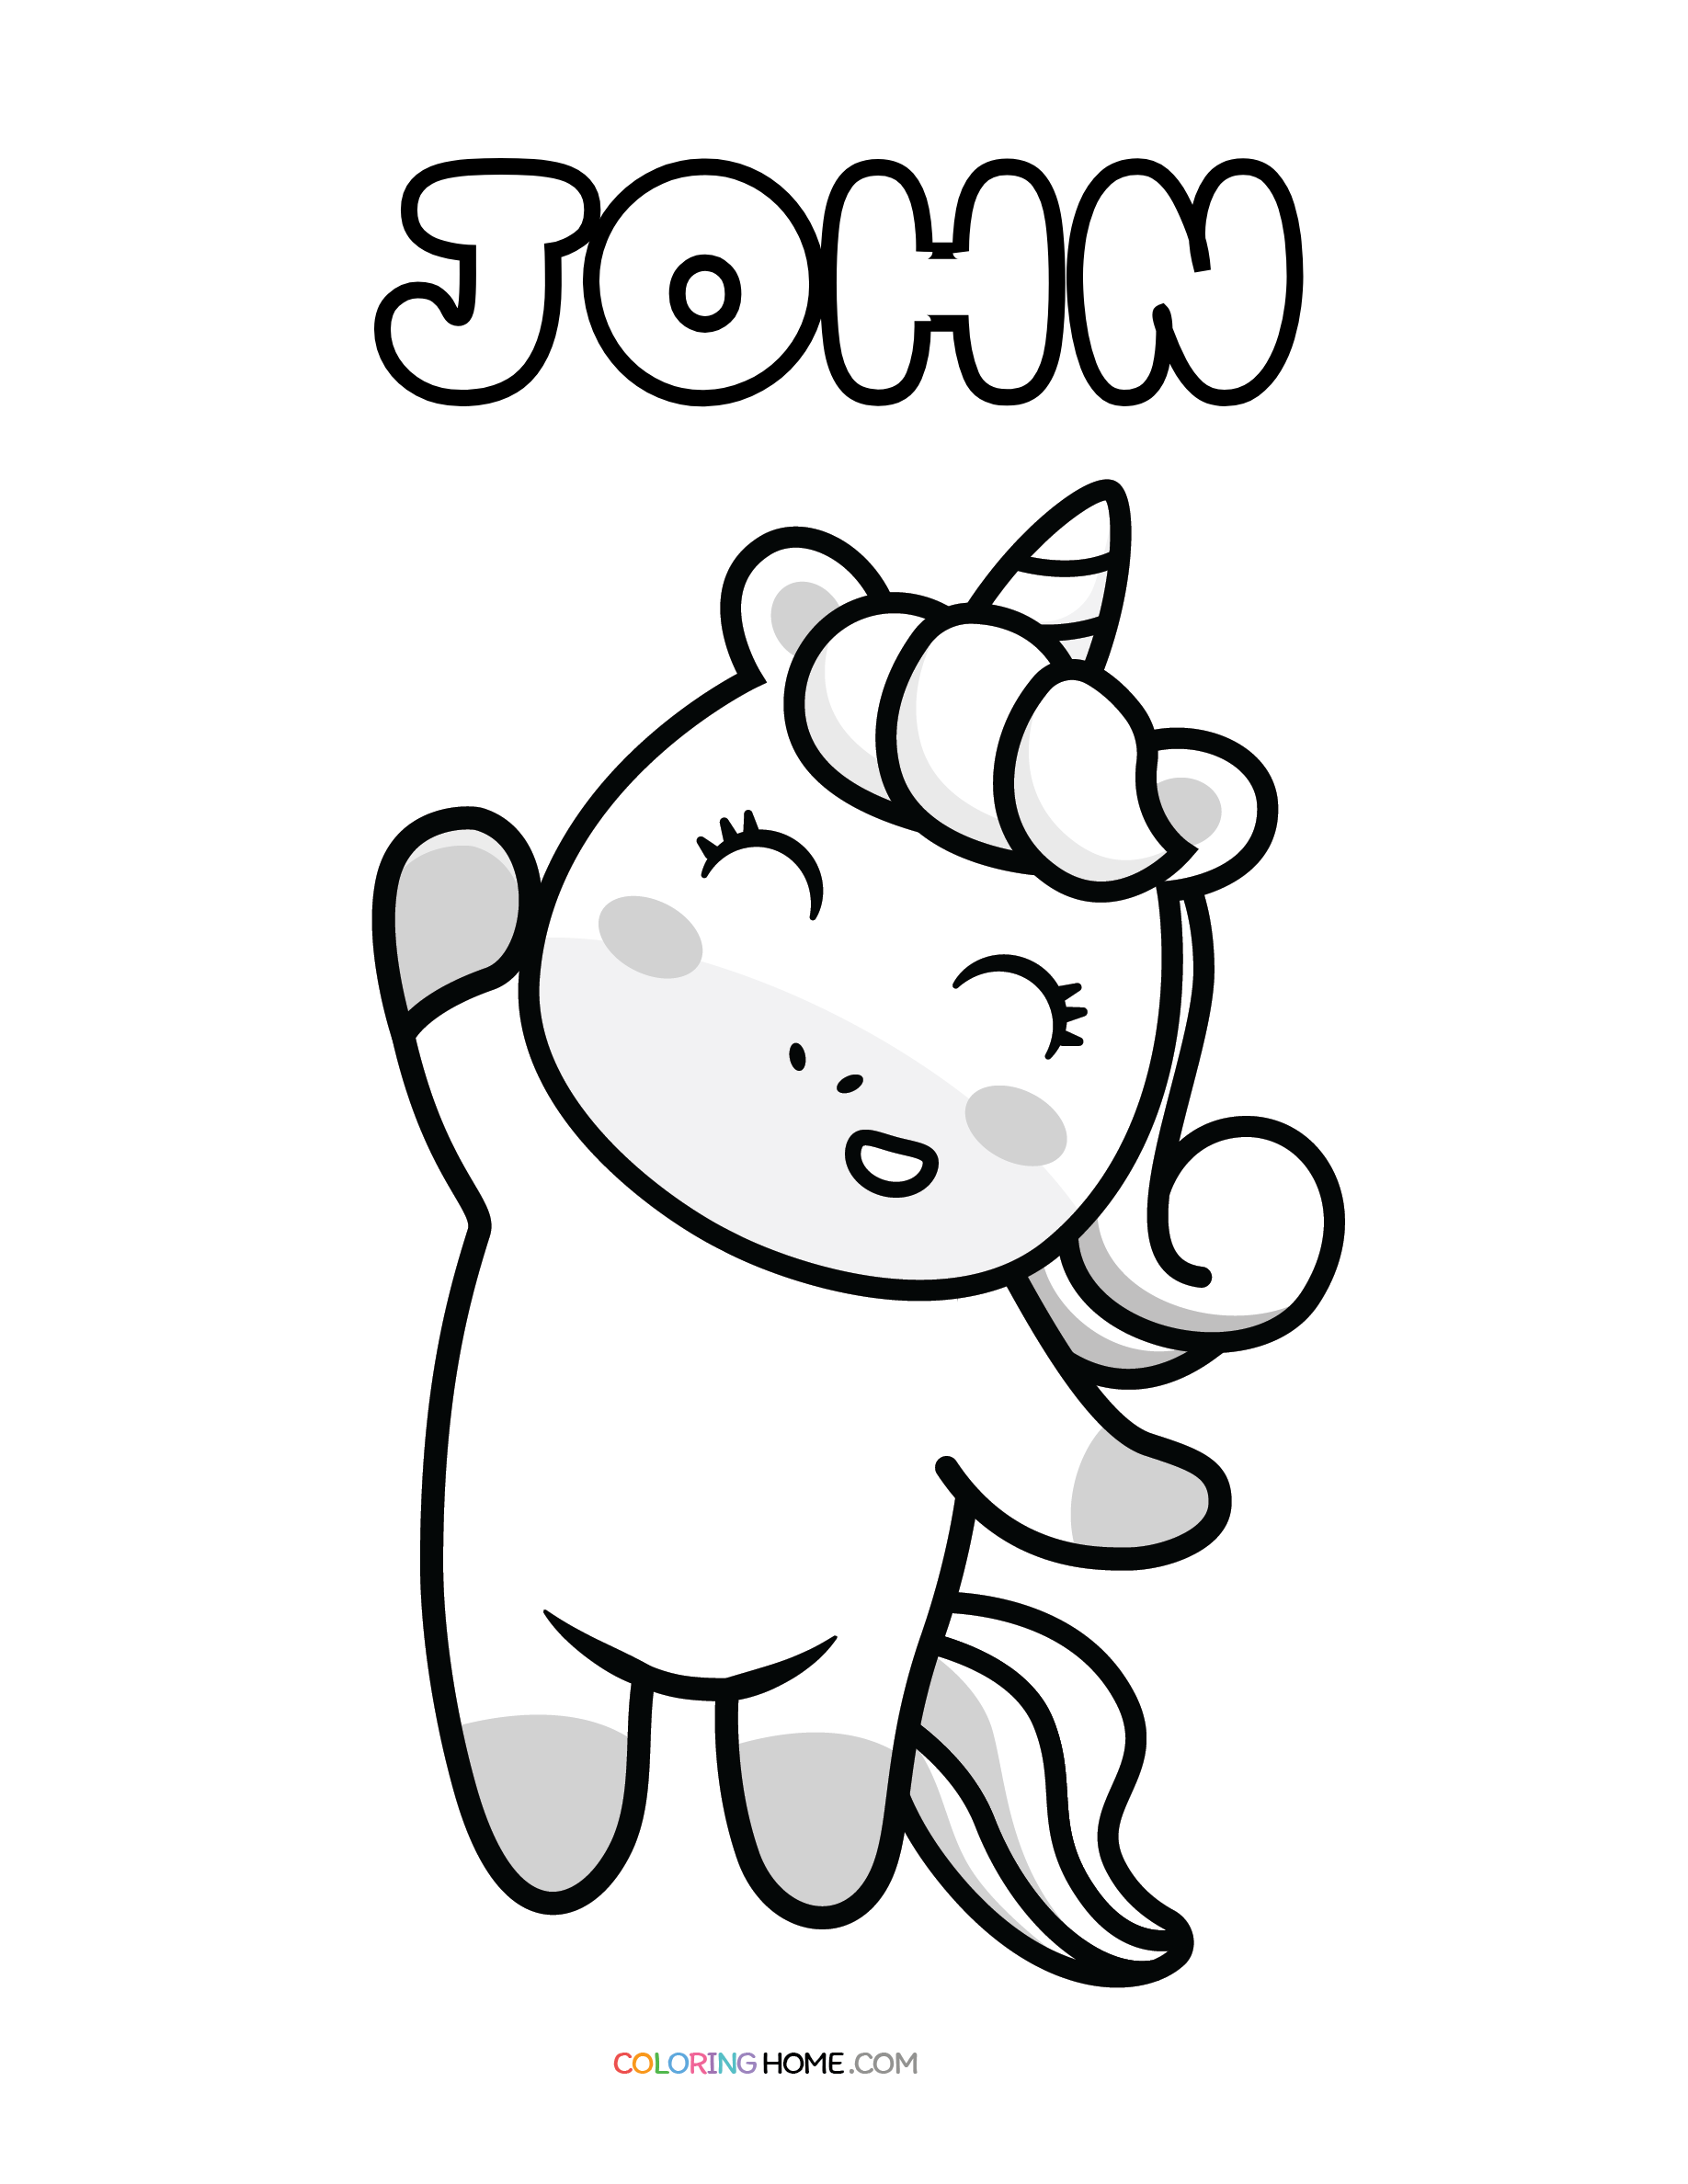 John unicorn coloring page